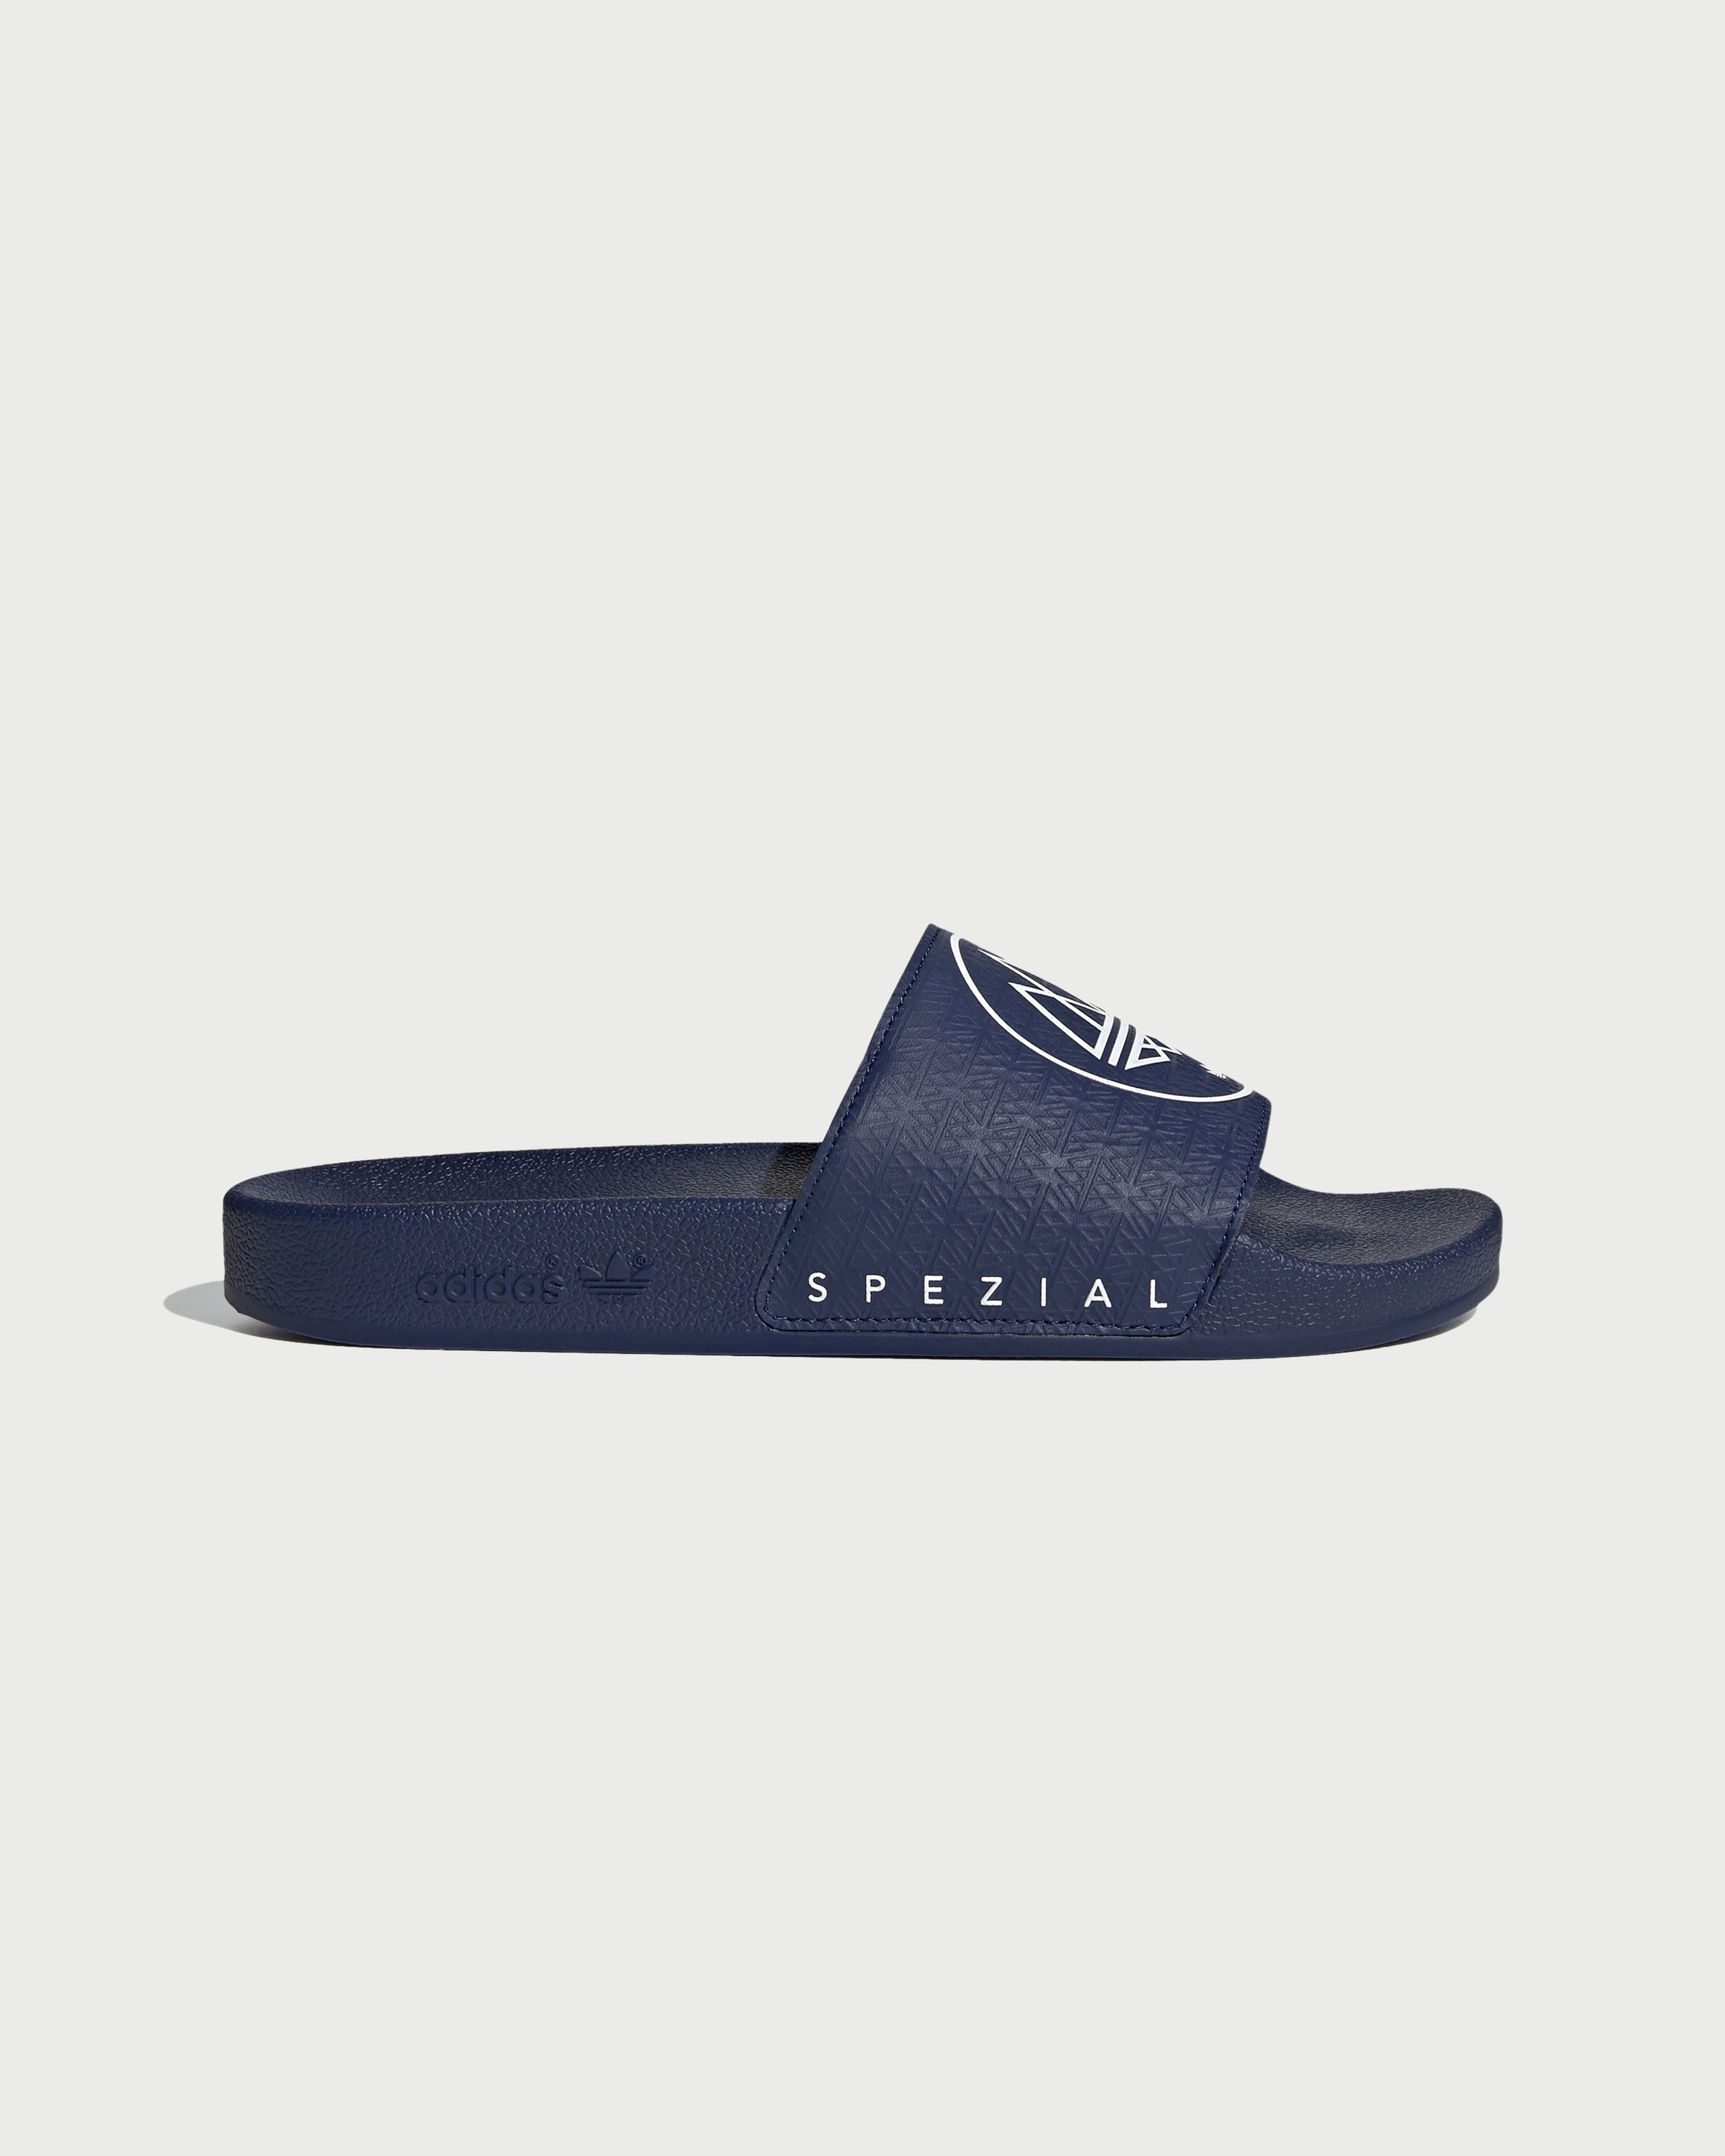 Adidas – Adilette Spezial Navy - Slides - Blue - Image 1